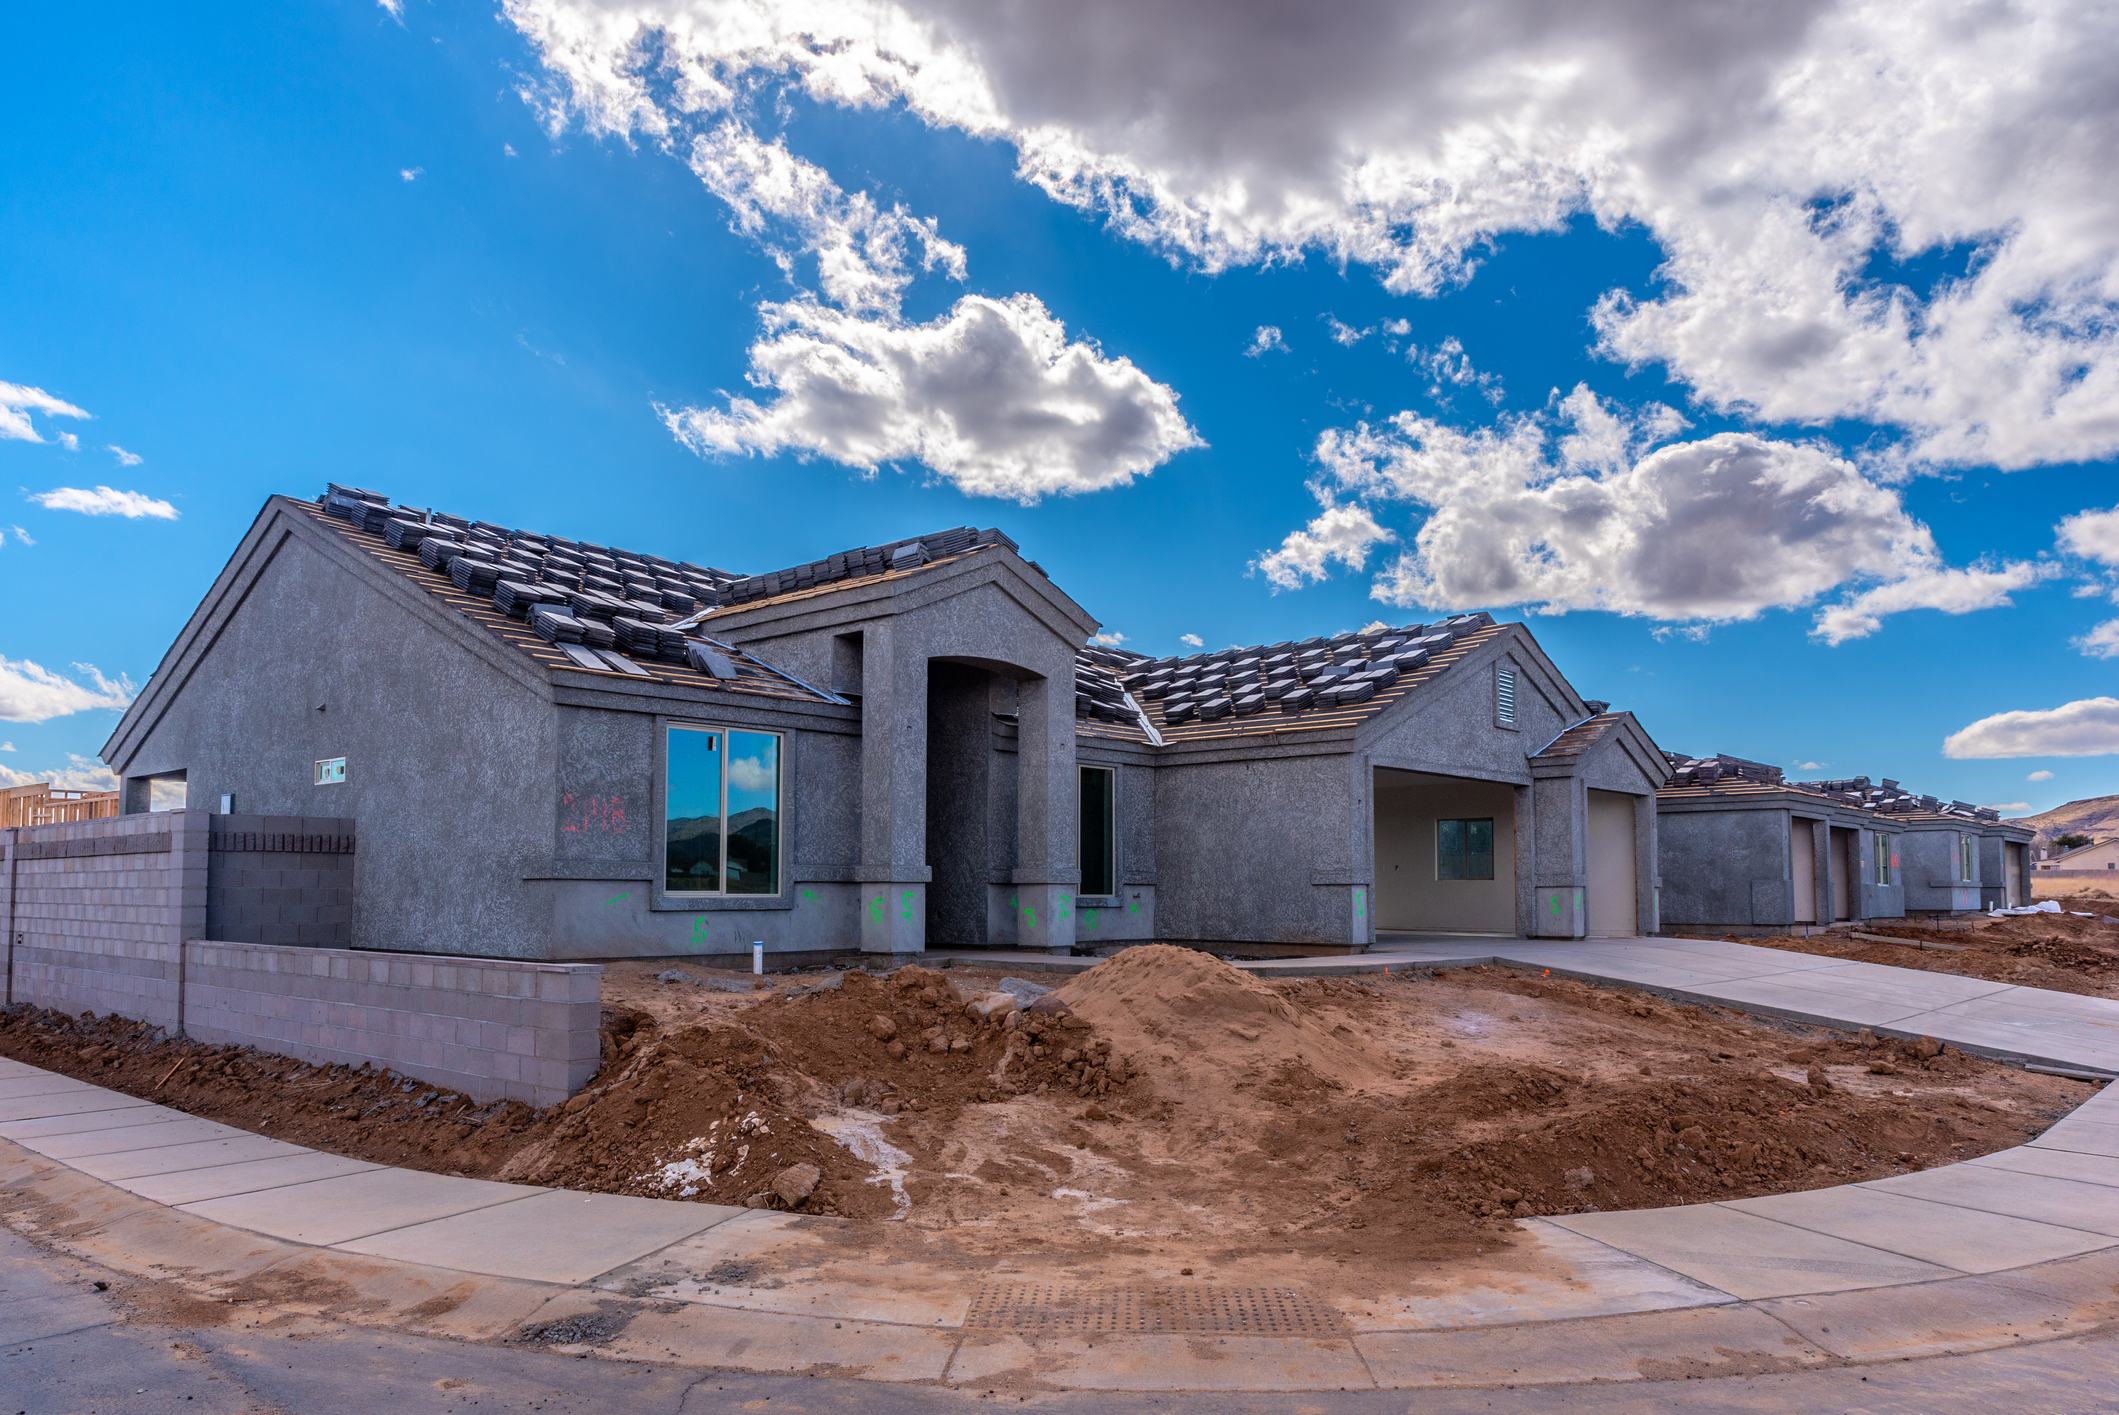 A home being built in an Arizona neighborhood.